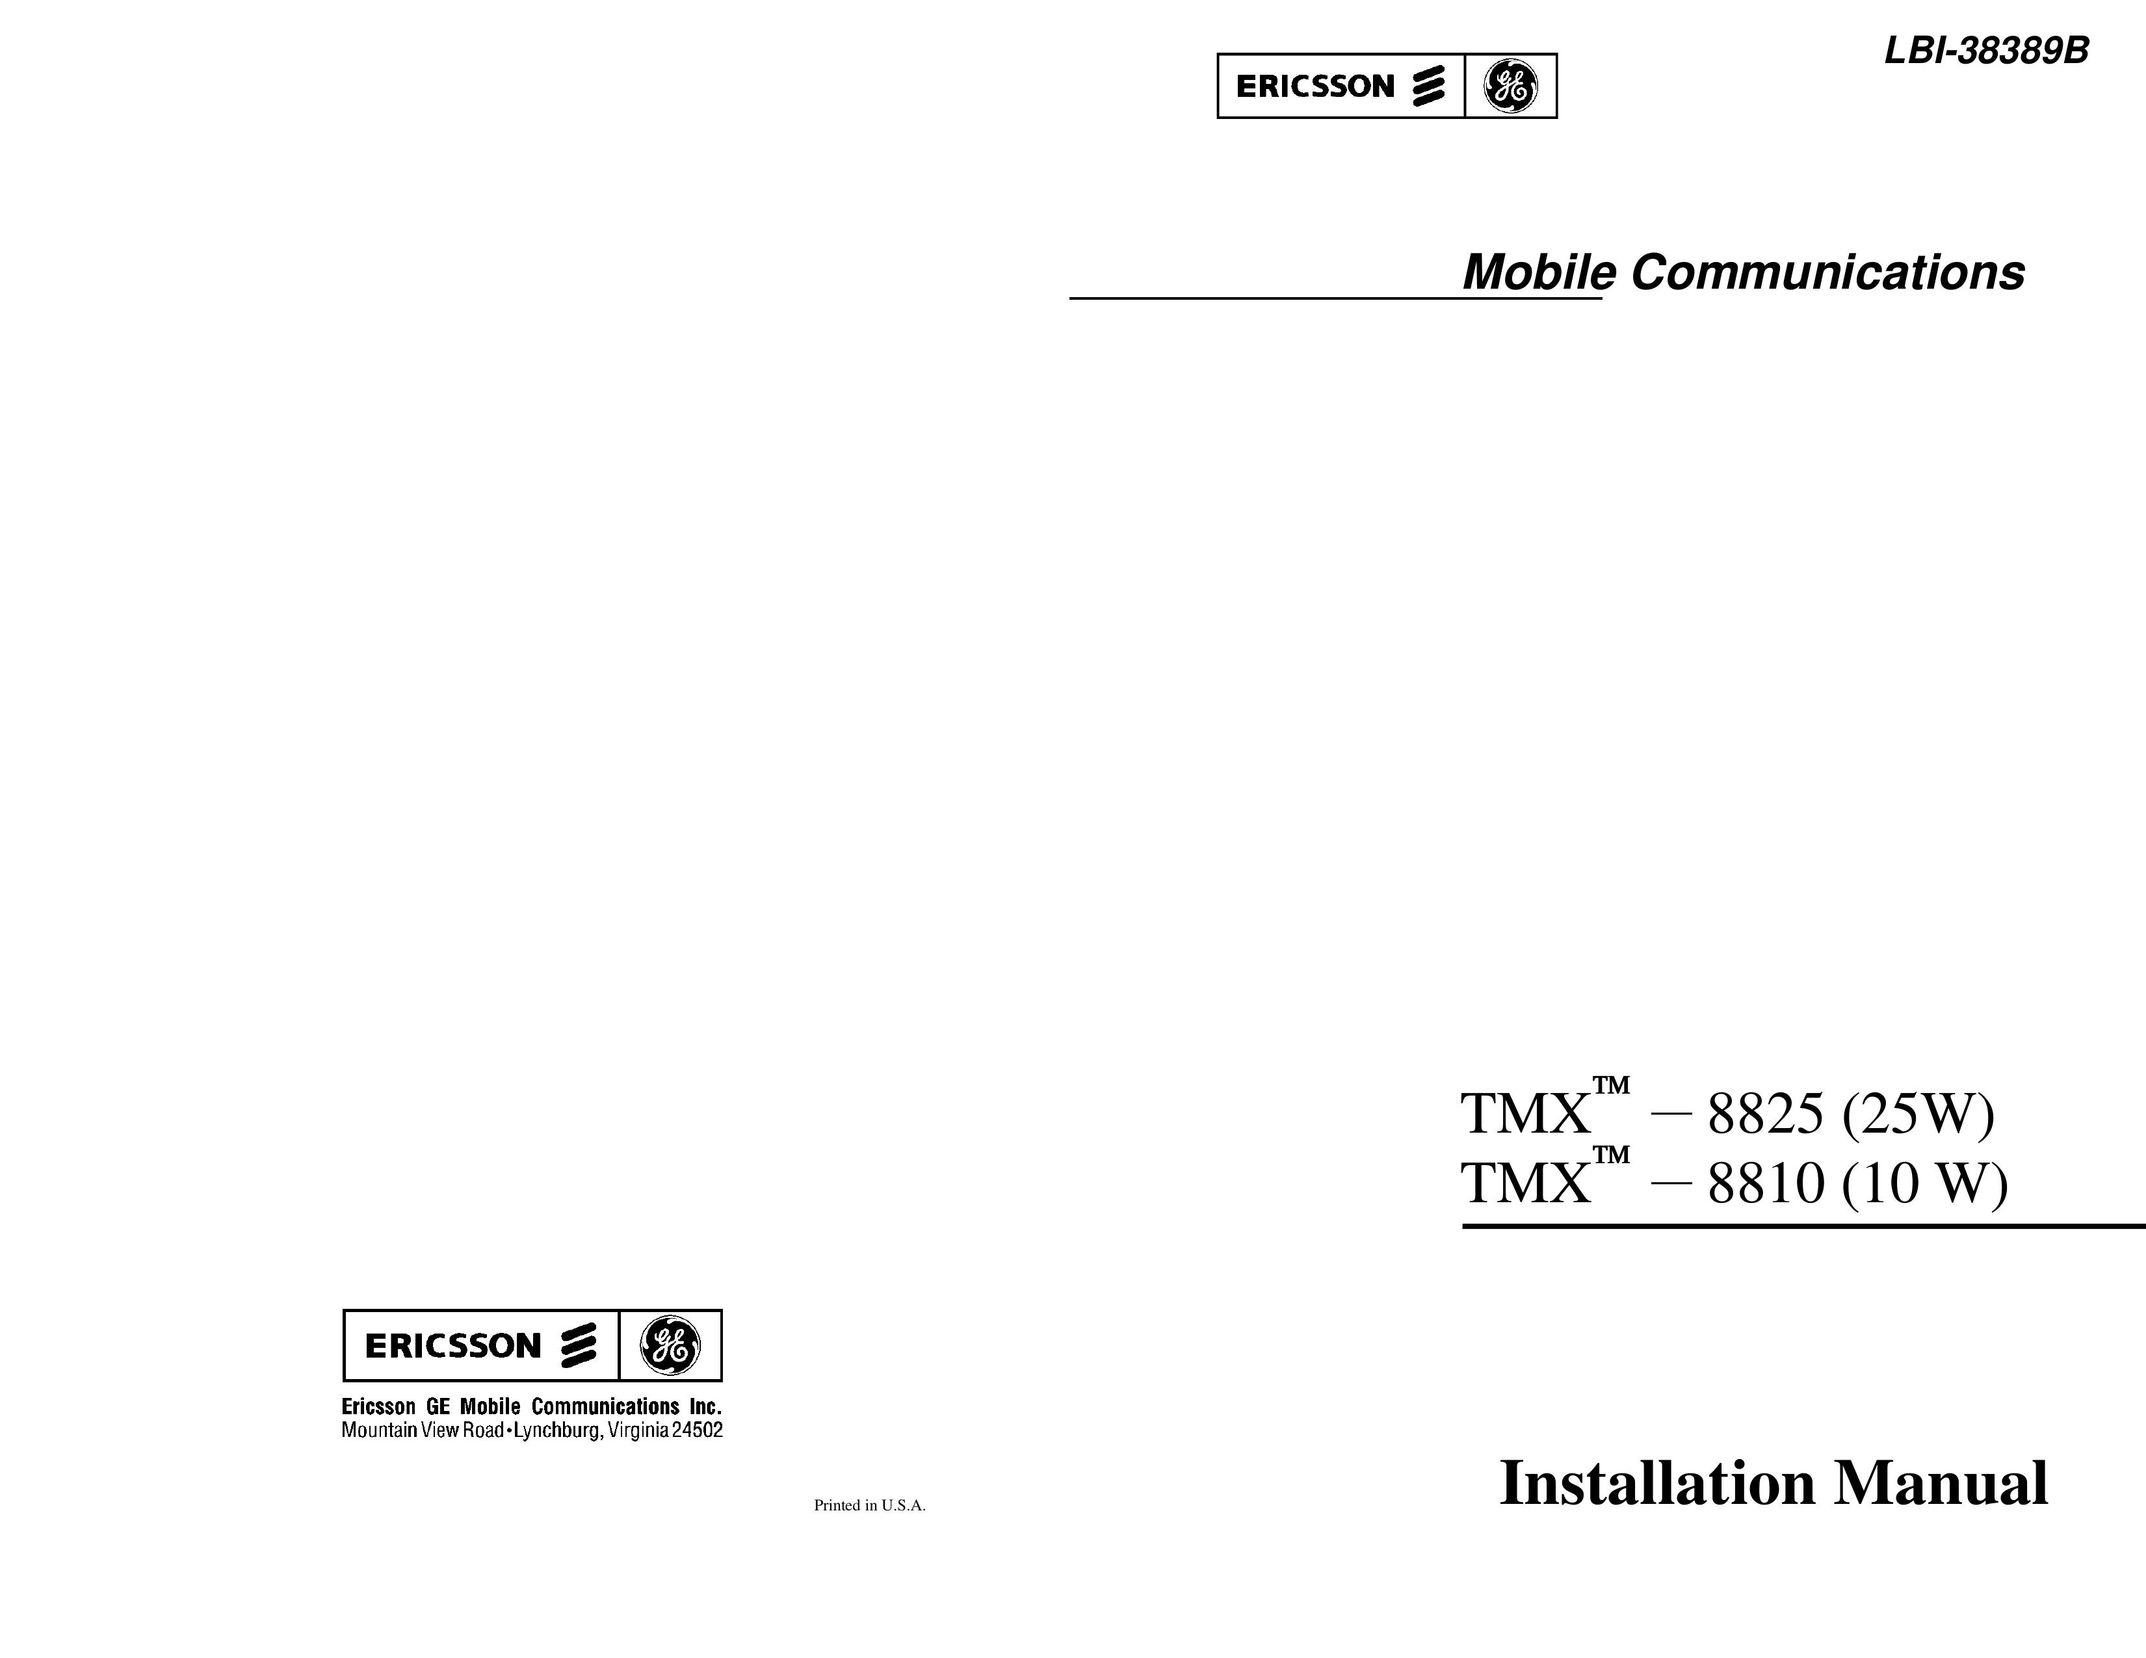 Ericsson TMX-8825 Cell Phone User Manual